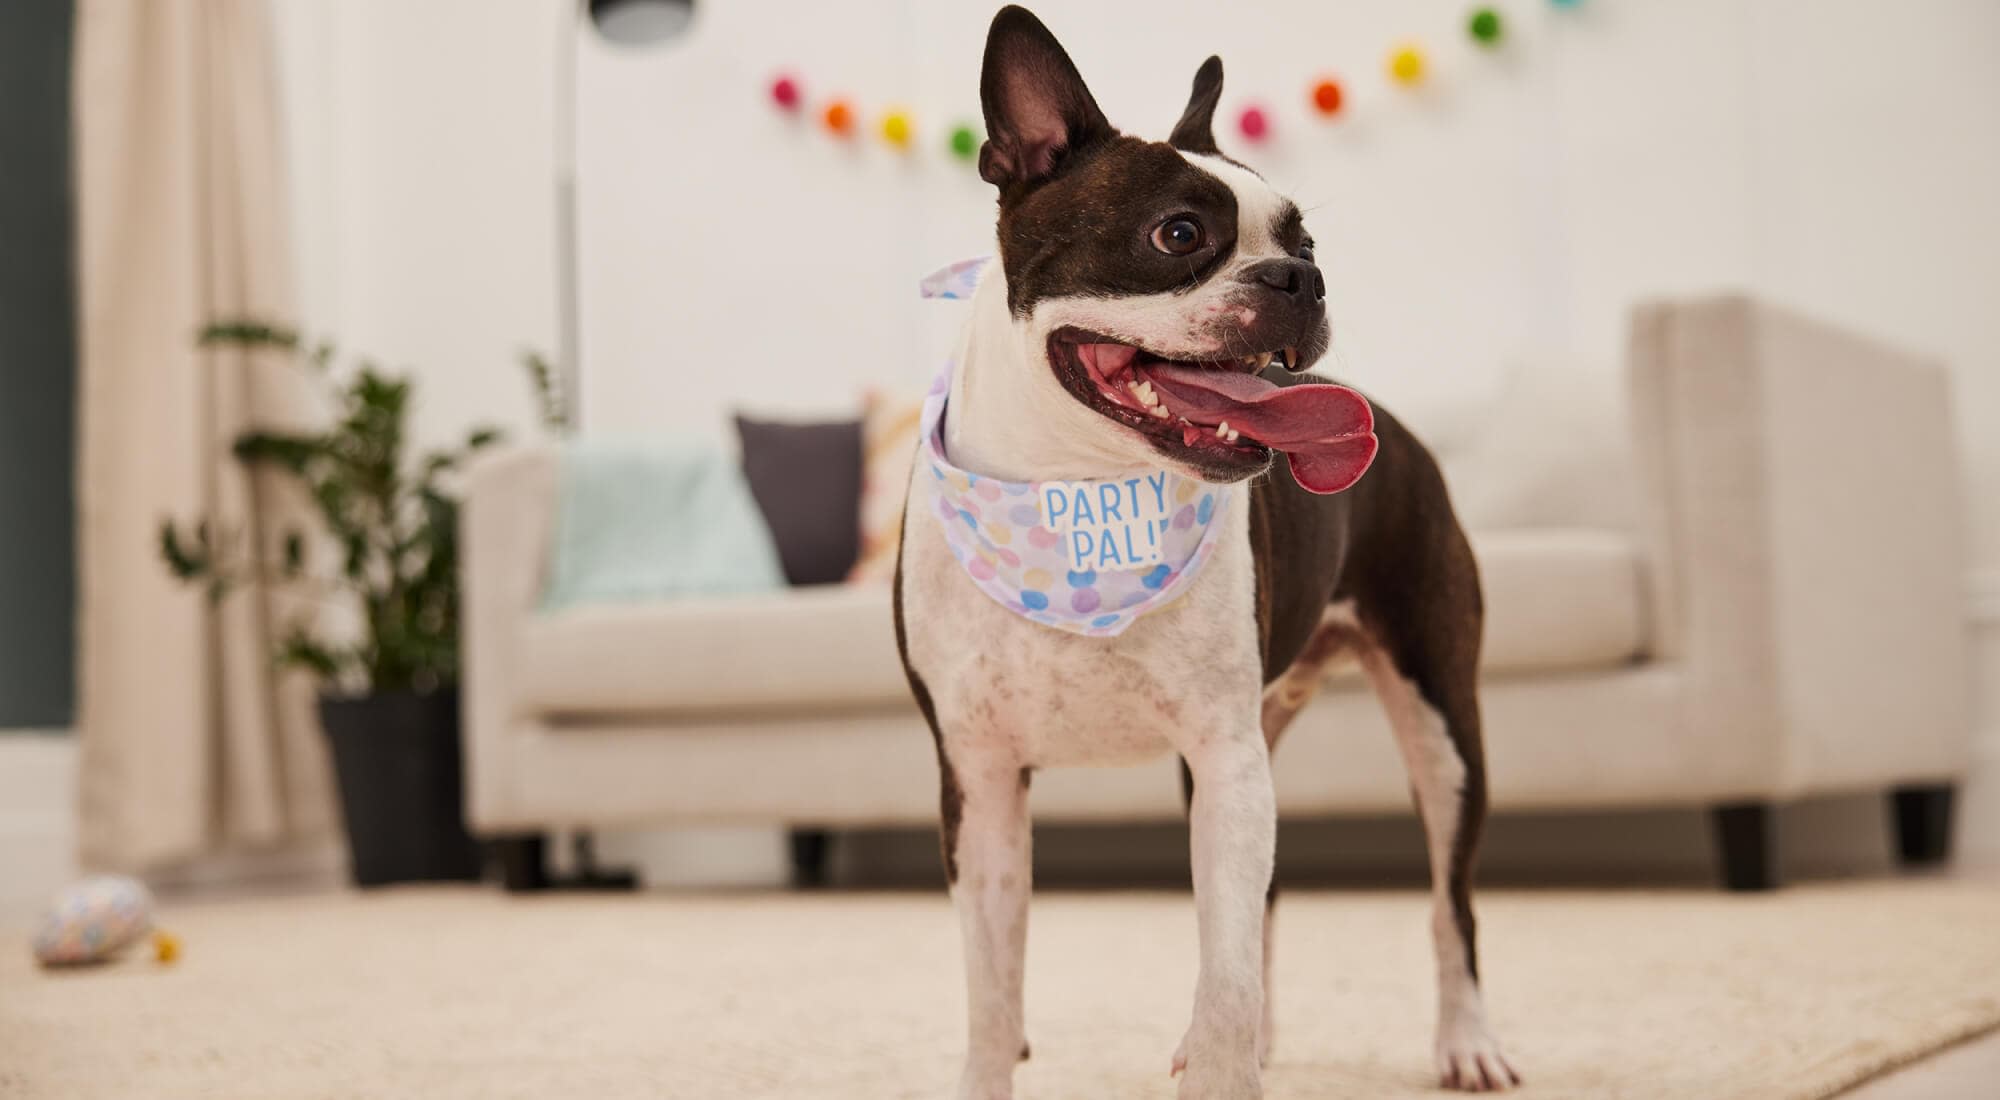 A dog wearing Party pal bandana inside the room